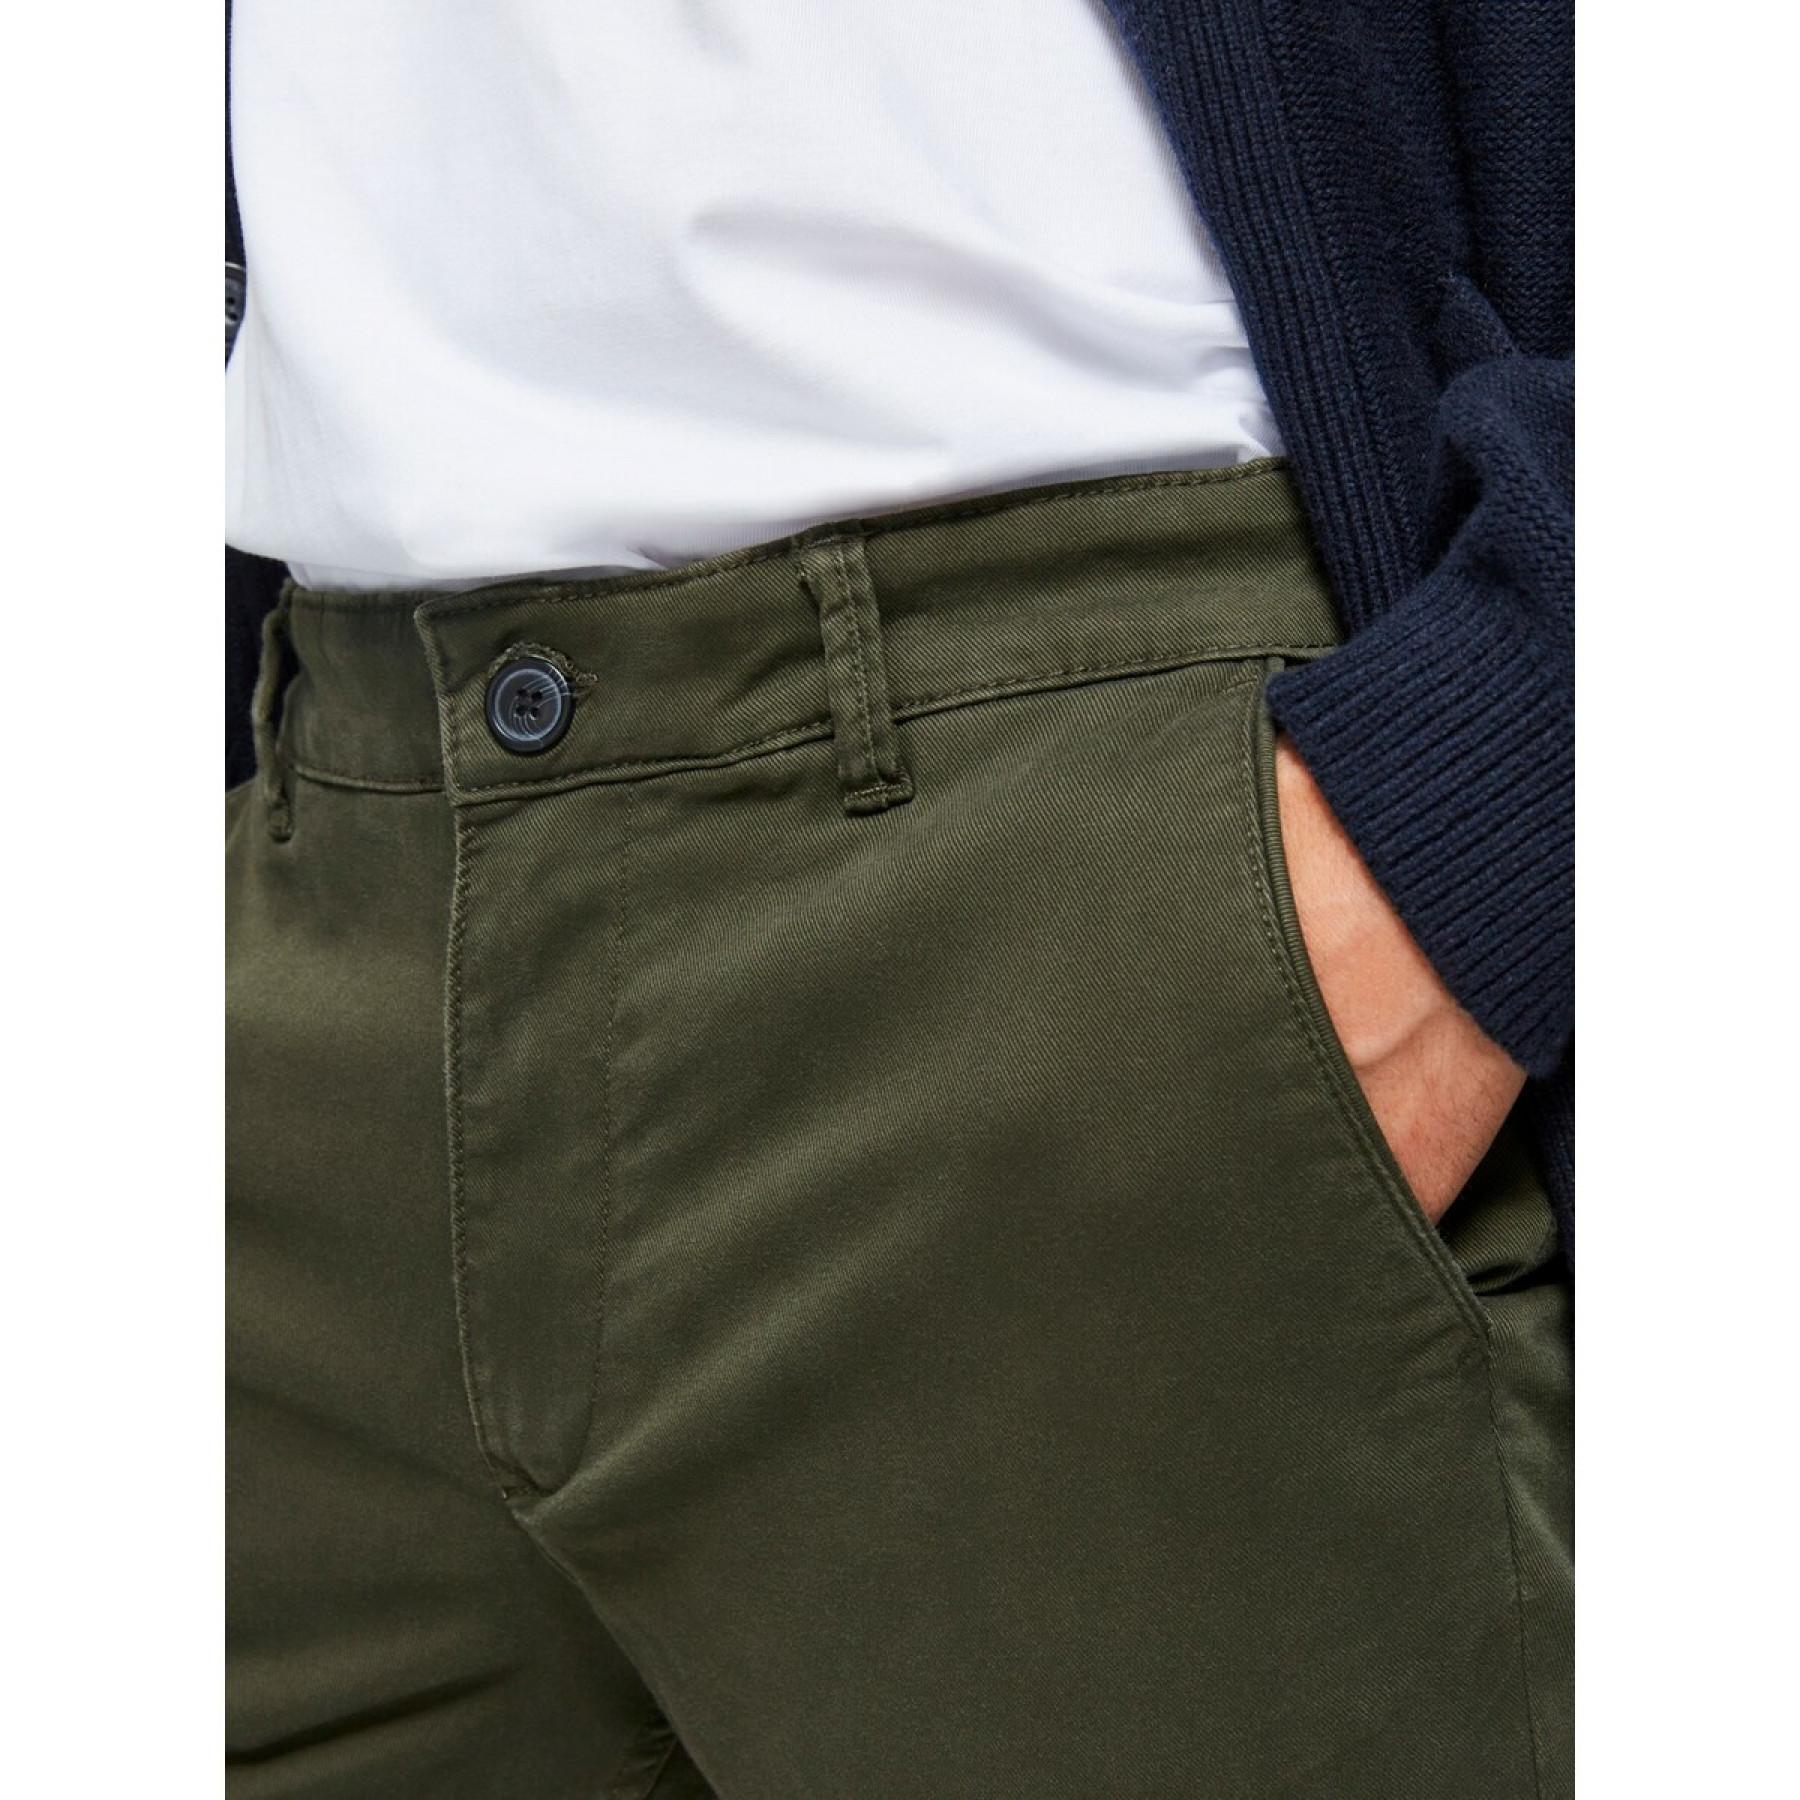 Pants Selected Newparis flex straight